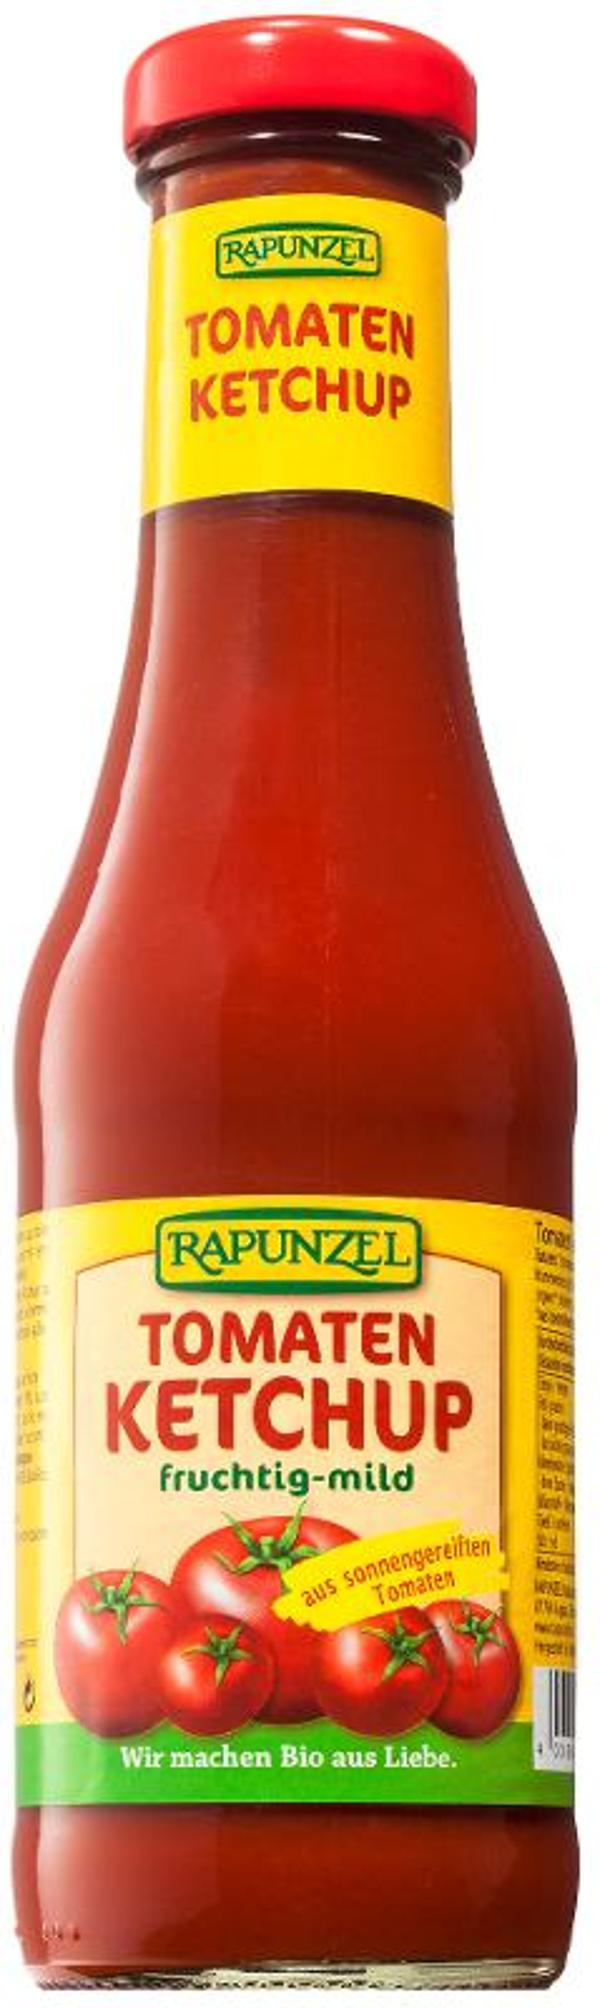 Produktfoto zu Tomaten-Ketchup, 450ml